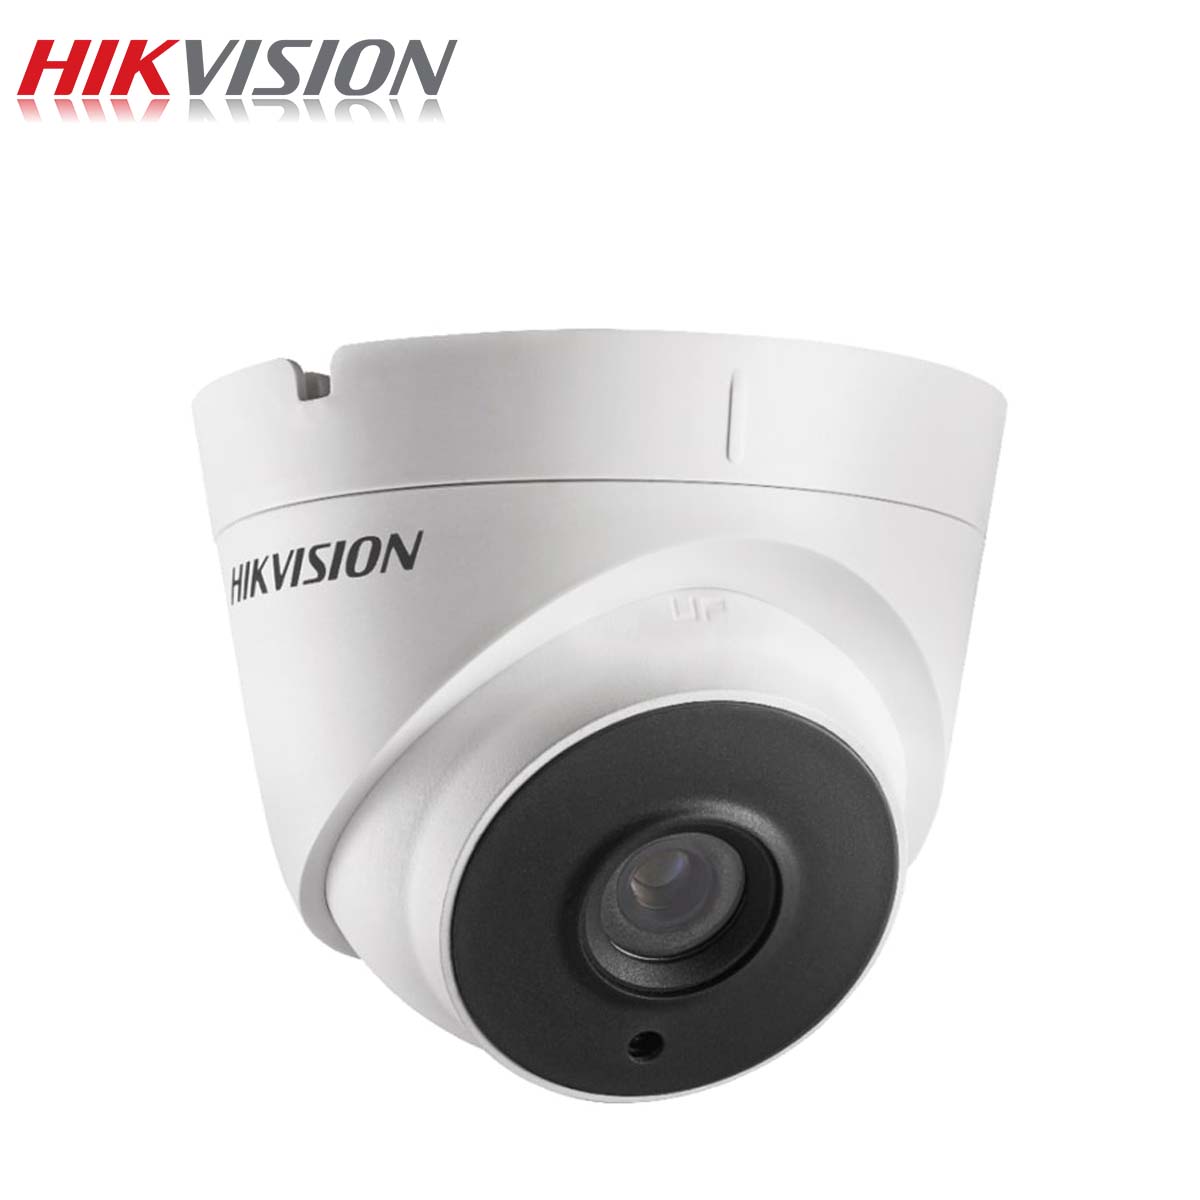 HIKVISION DS-2CE56D0T-IT3 HD1080P Exir Turret Camera 2MP